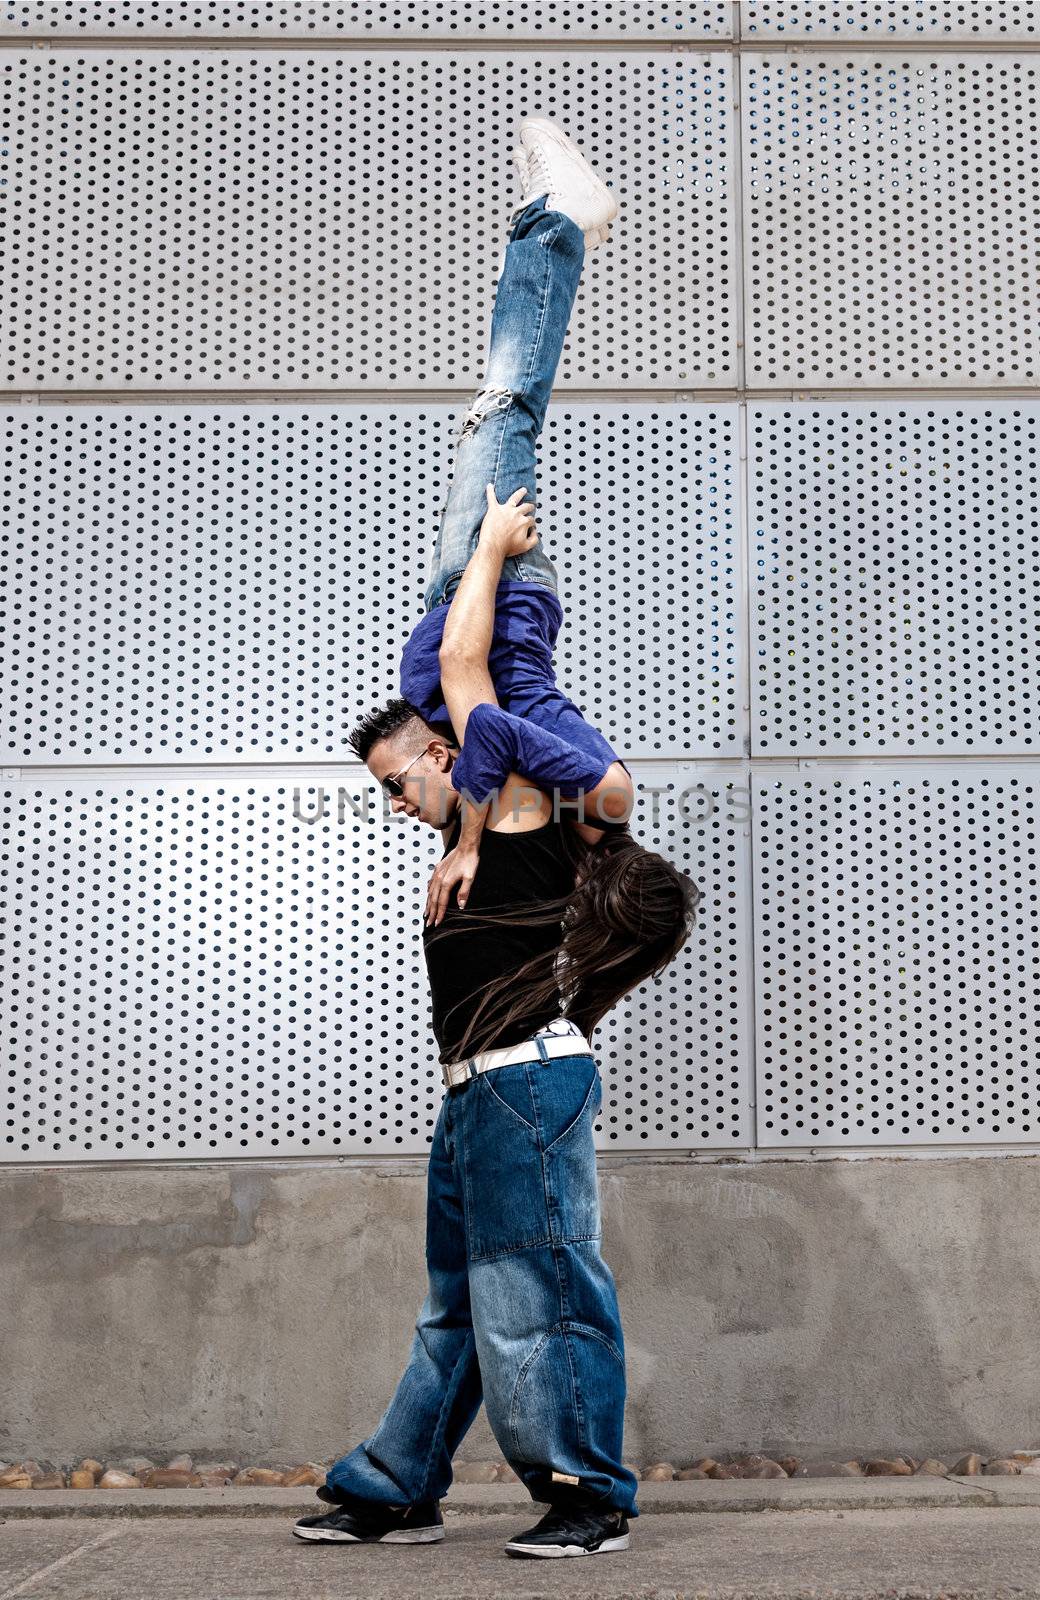 Young urban couple dancers hip hop dancing urban scene by dgmata